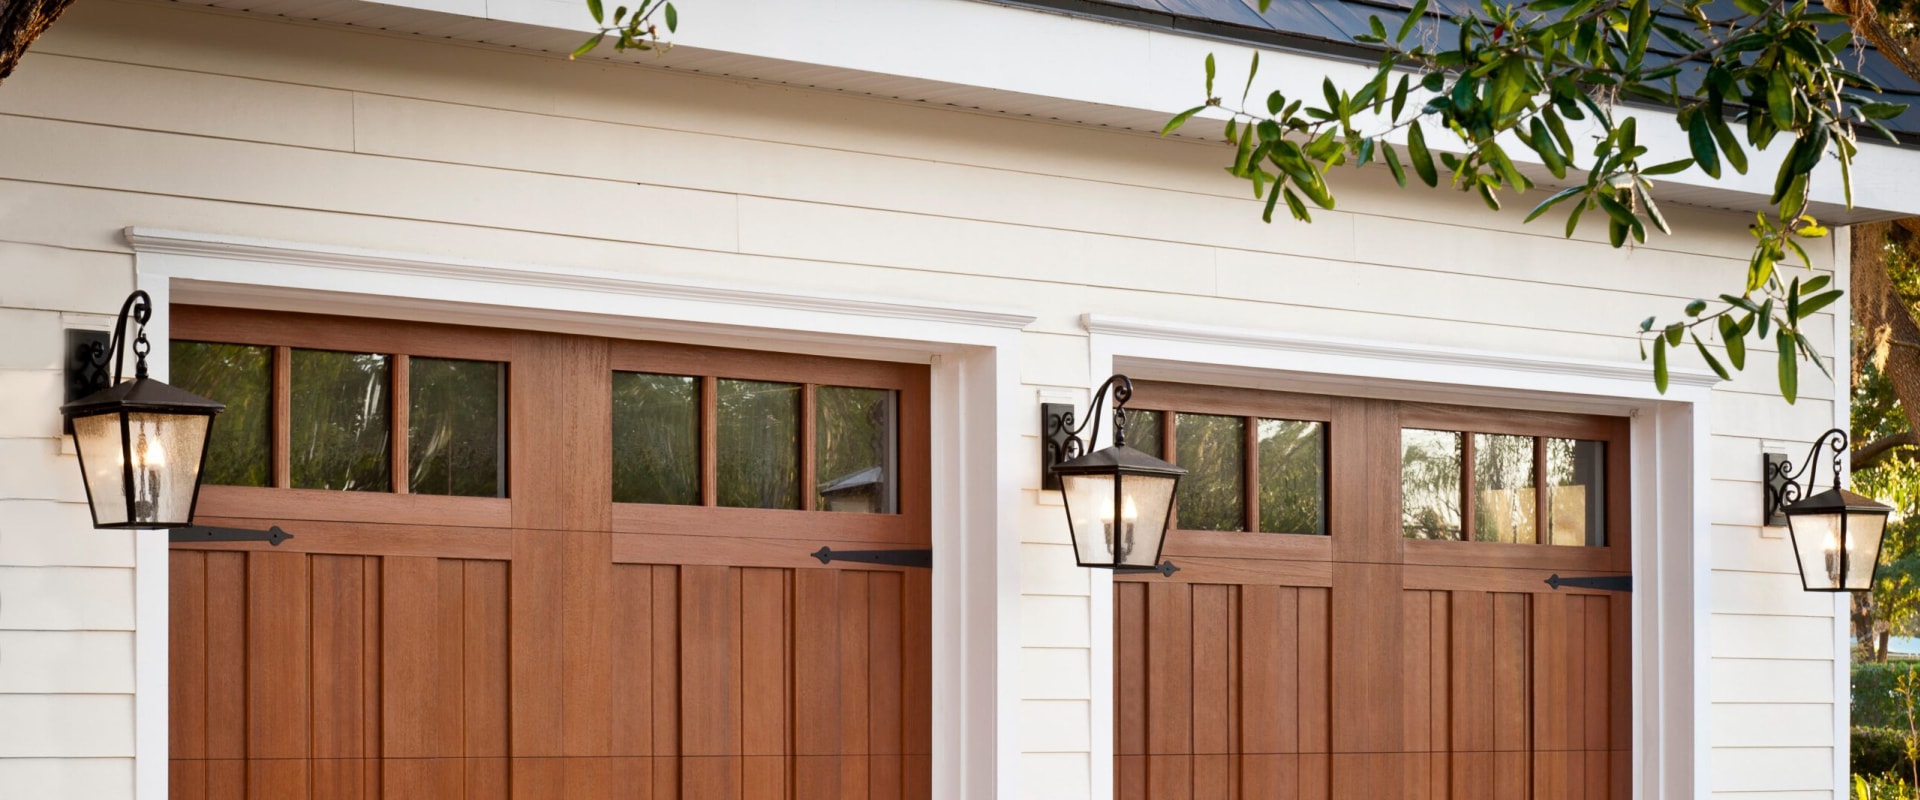 Eco-Friendly Garage Door Designs for Homes